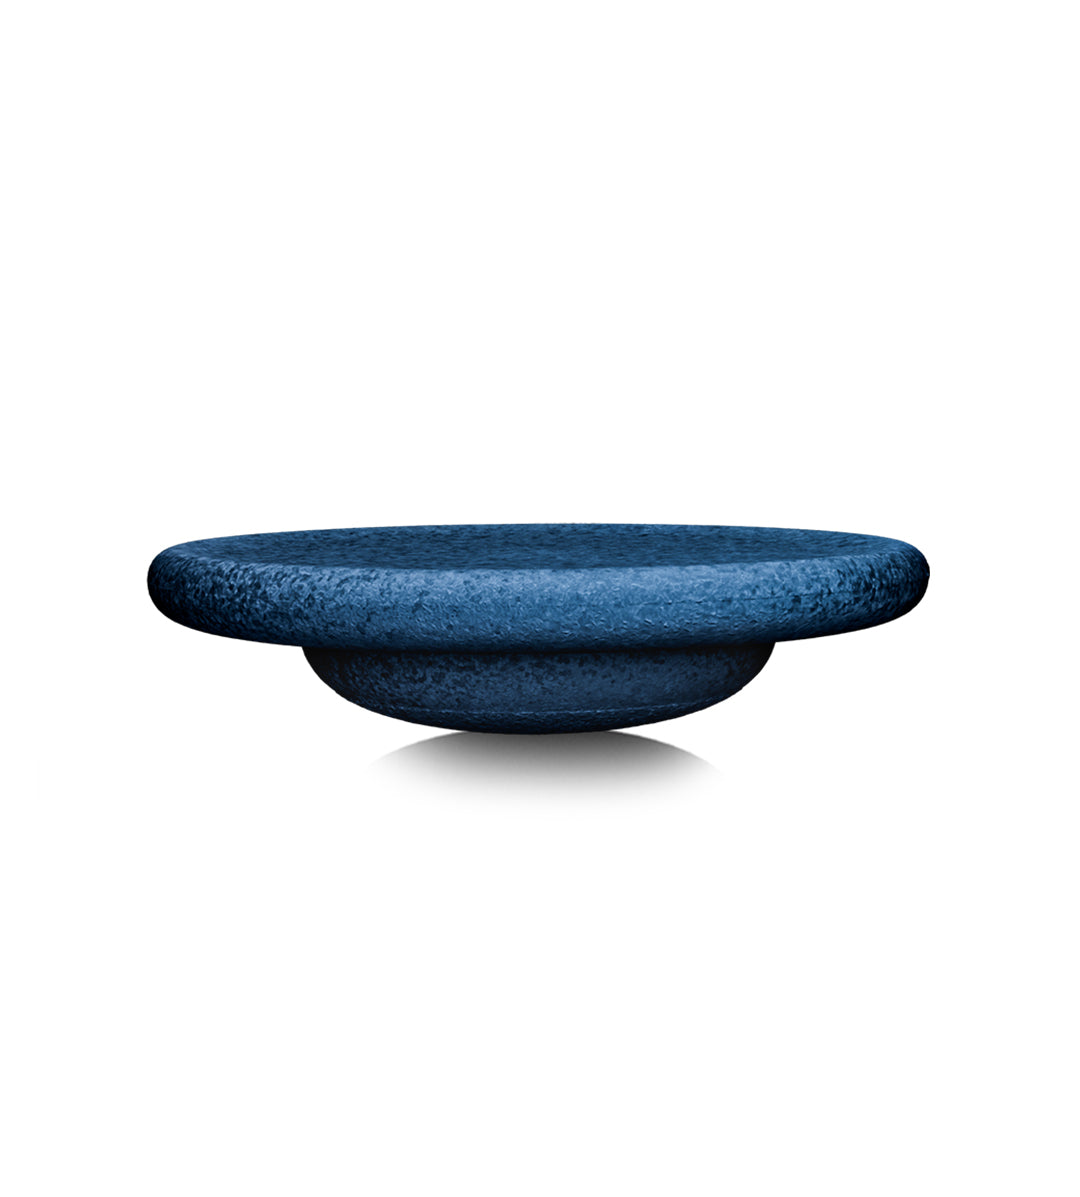 Stapelstein Balance Board dunkelblau / dark blue